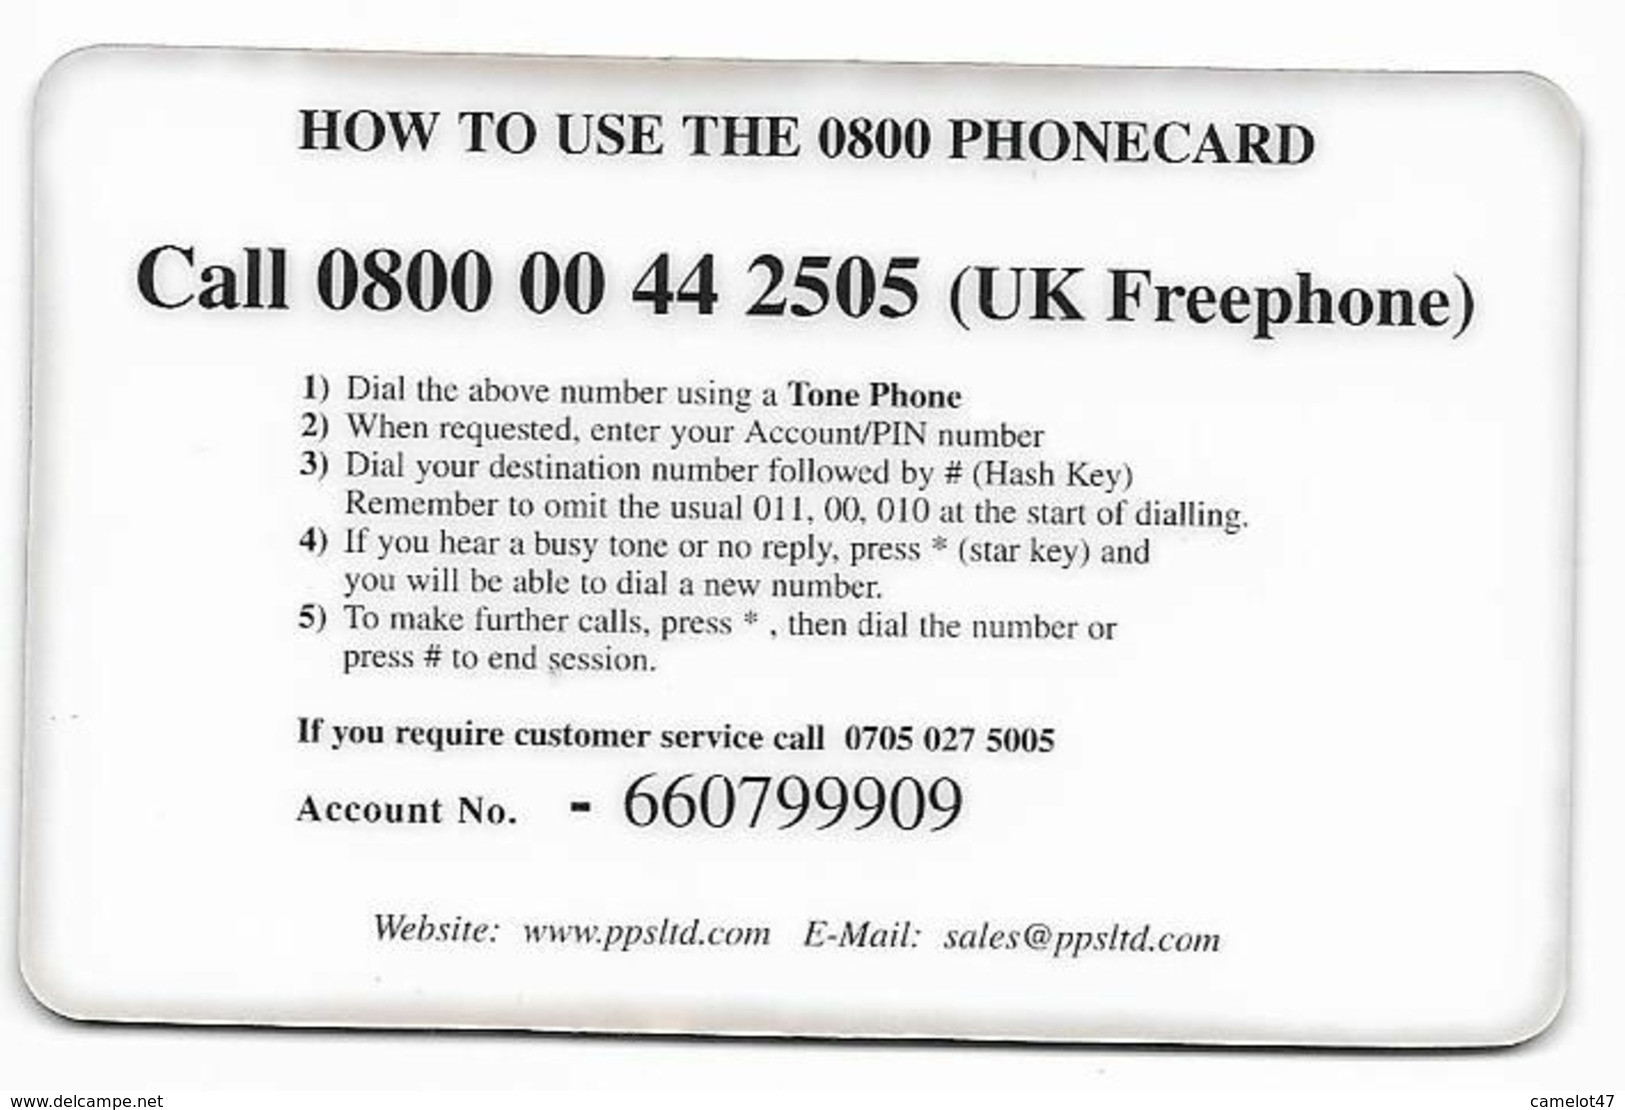 Queen, U.K. Prepaid Phone Card, PROBABLY FAKE, # Queen-1 - Musique